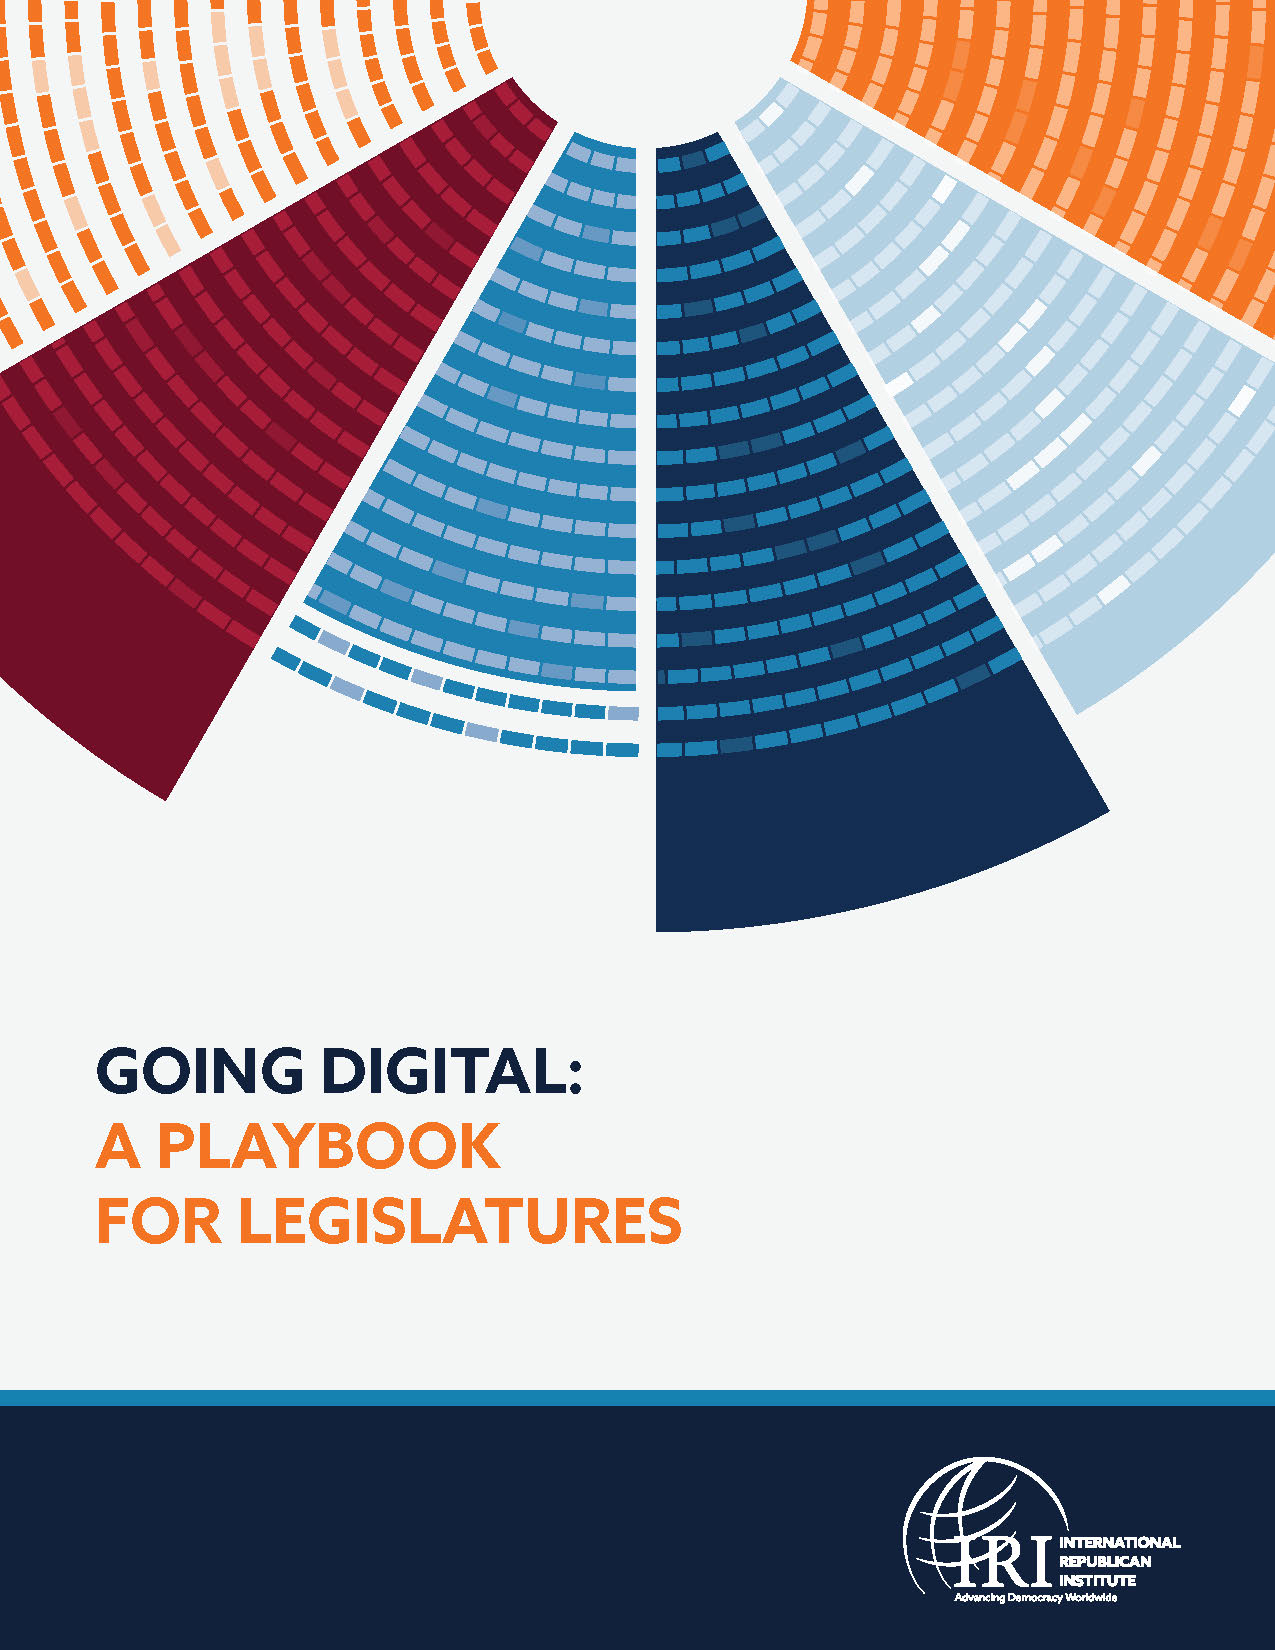 Going digital playbook for legislatures cover